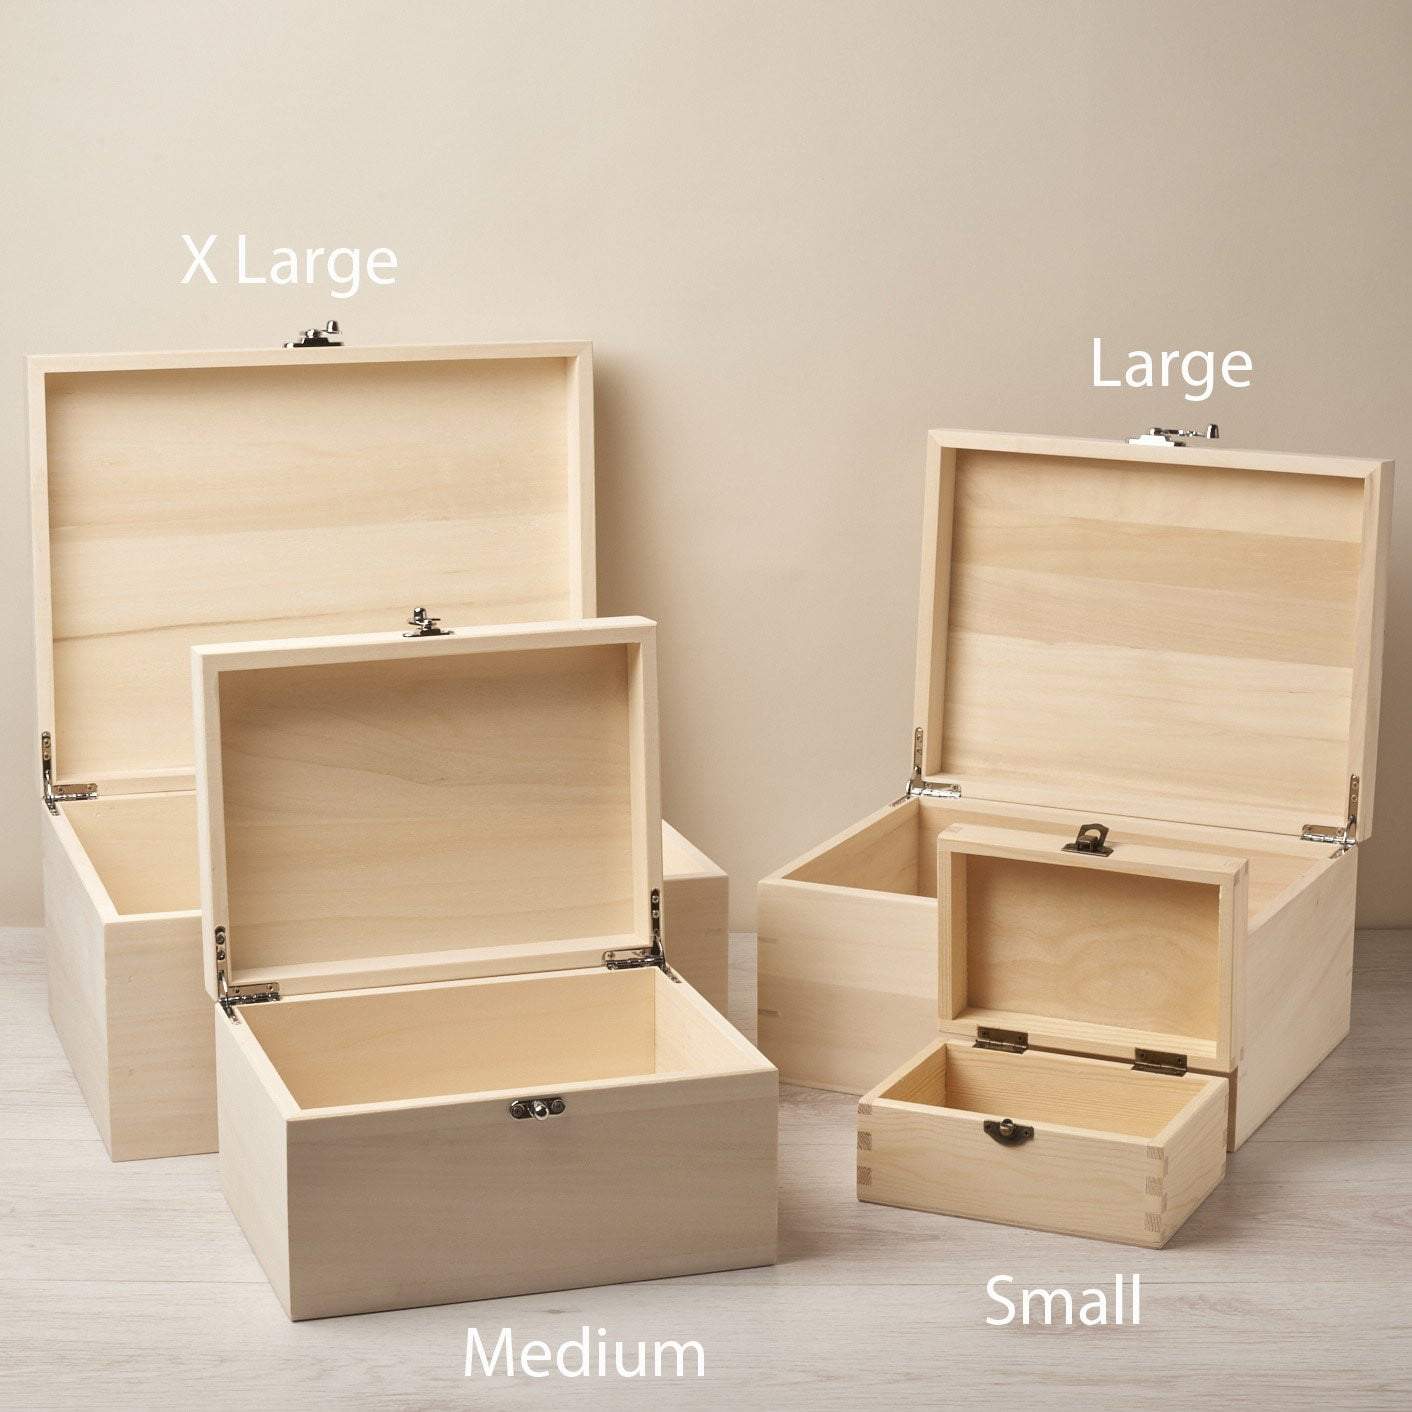 Keepsake Box - Personalised Wooden Keepsake  Memory Box - Own Design